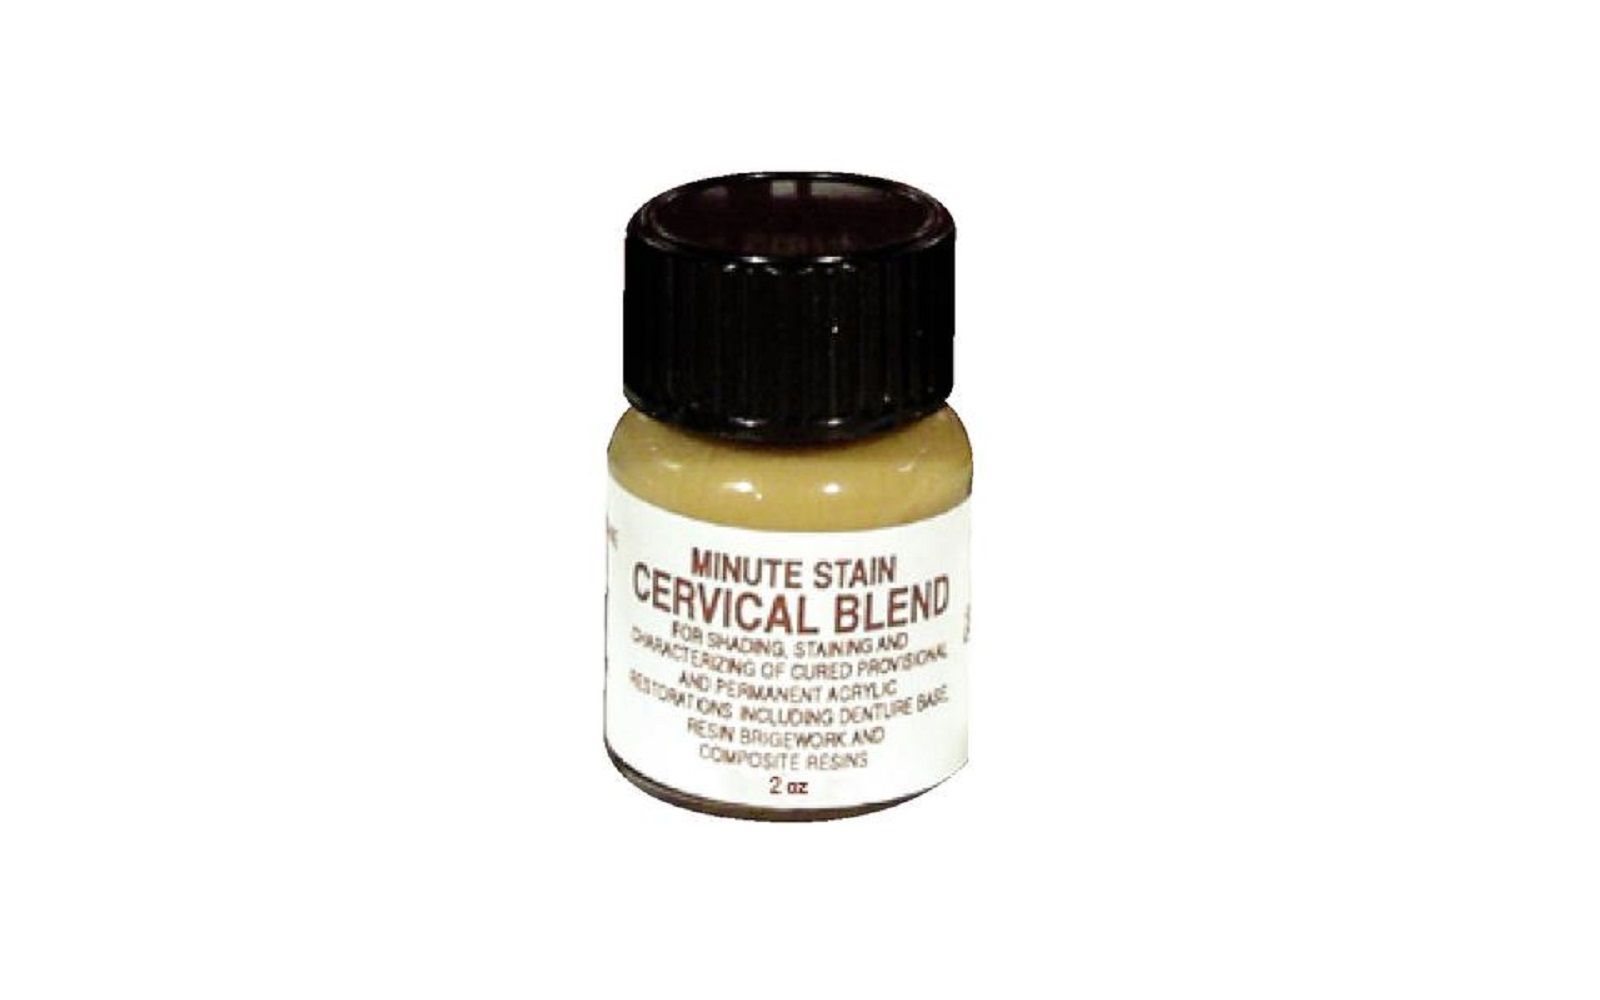 Minute stain colors – cervical blend, 2 oz refills